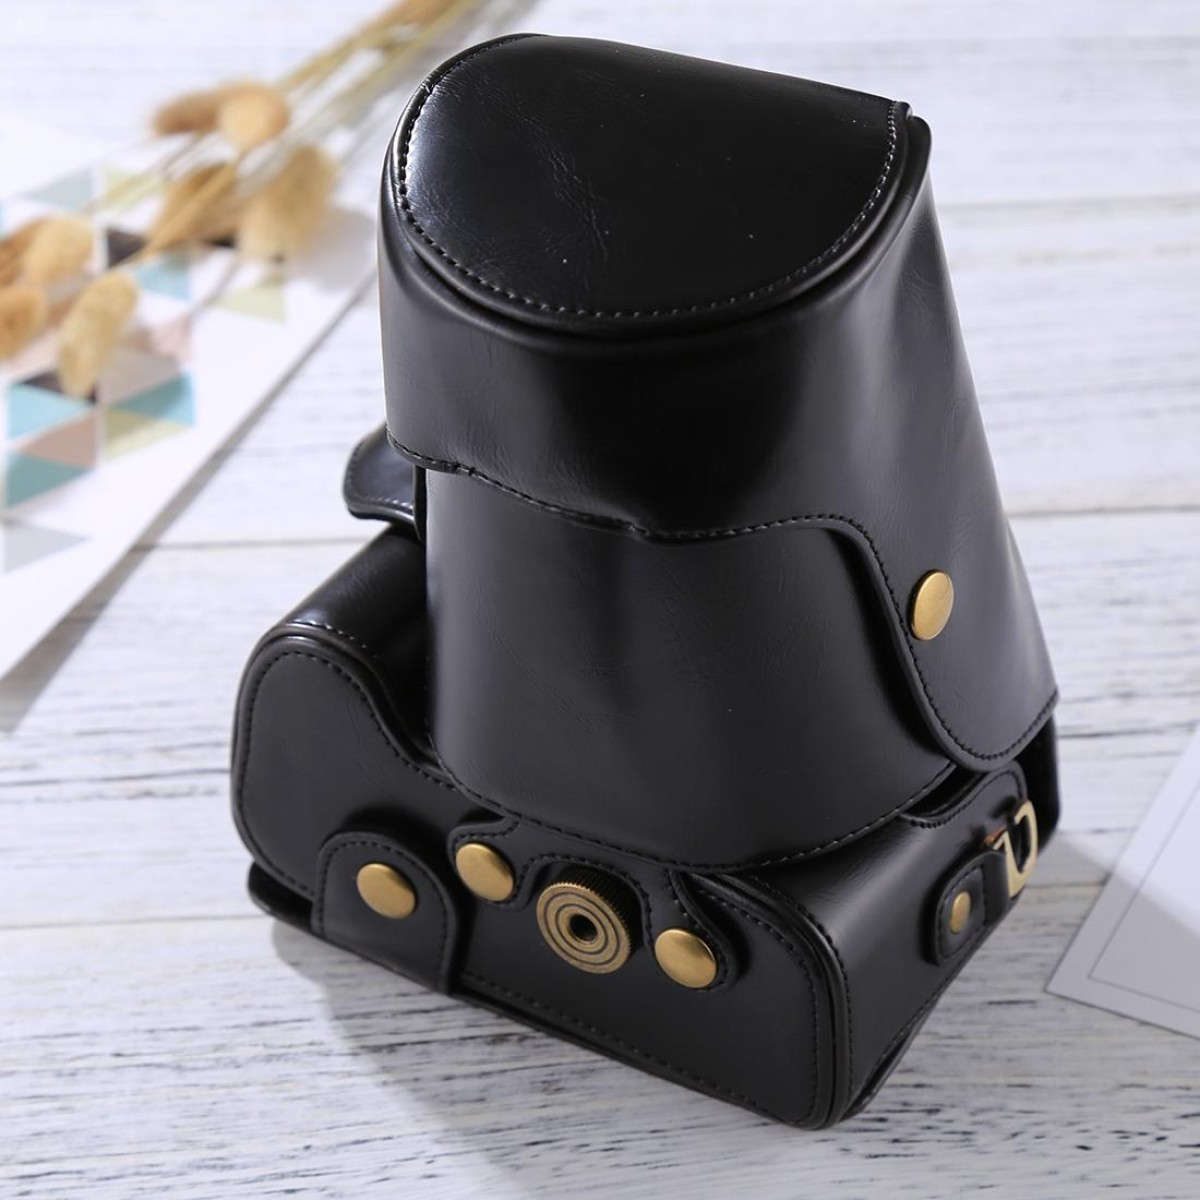 Full Body Camera PU Leather Case Bag for Nikon D5300 / D5200 / D5100 (18-55mm / 18-105mm / 18-140mm Lens) (Black)